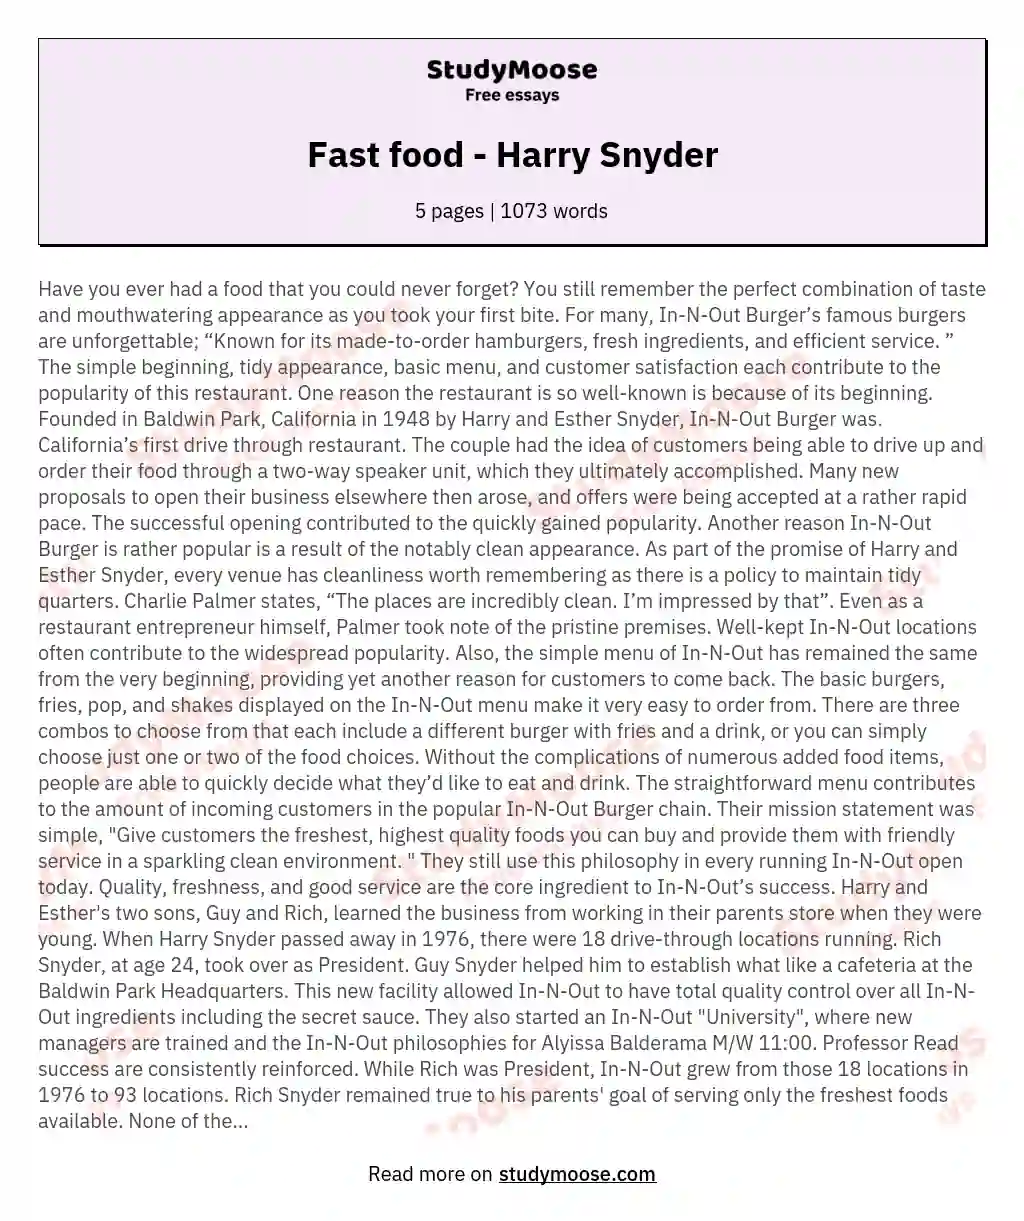 Fast food - Harry Snyder essay